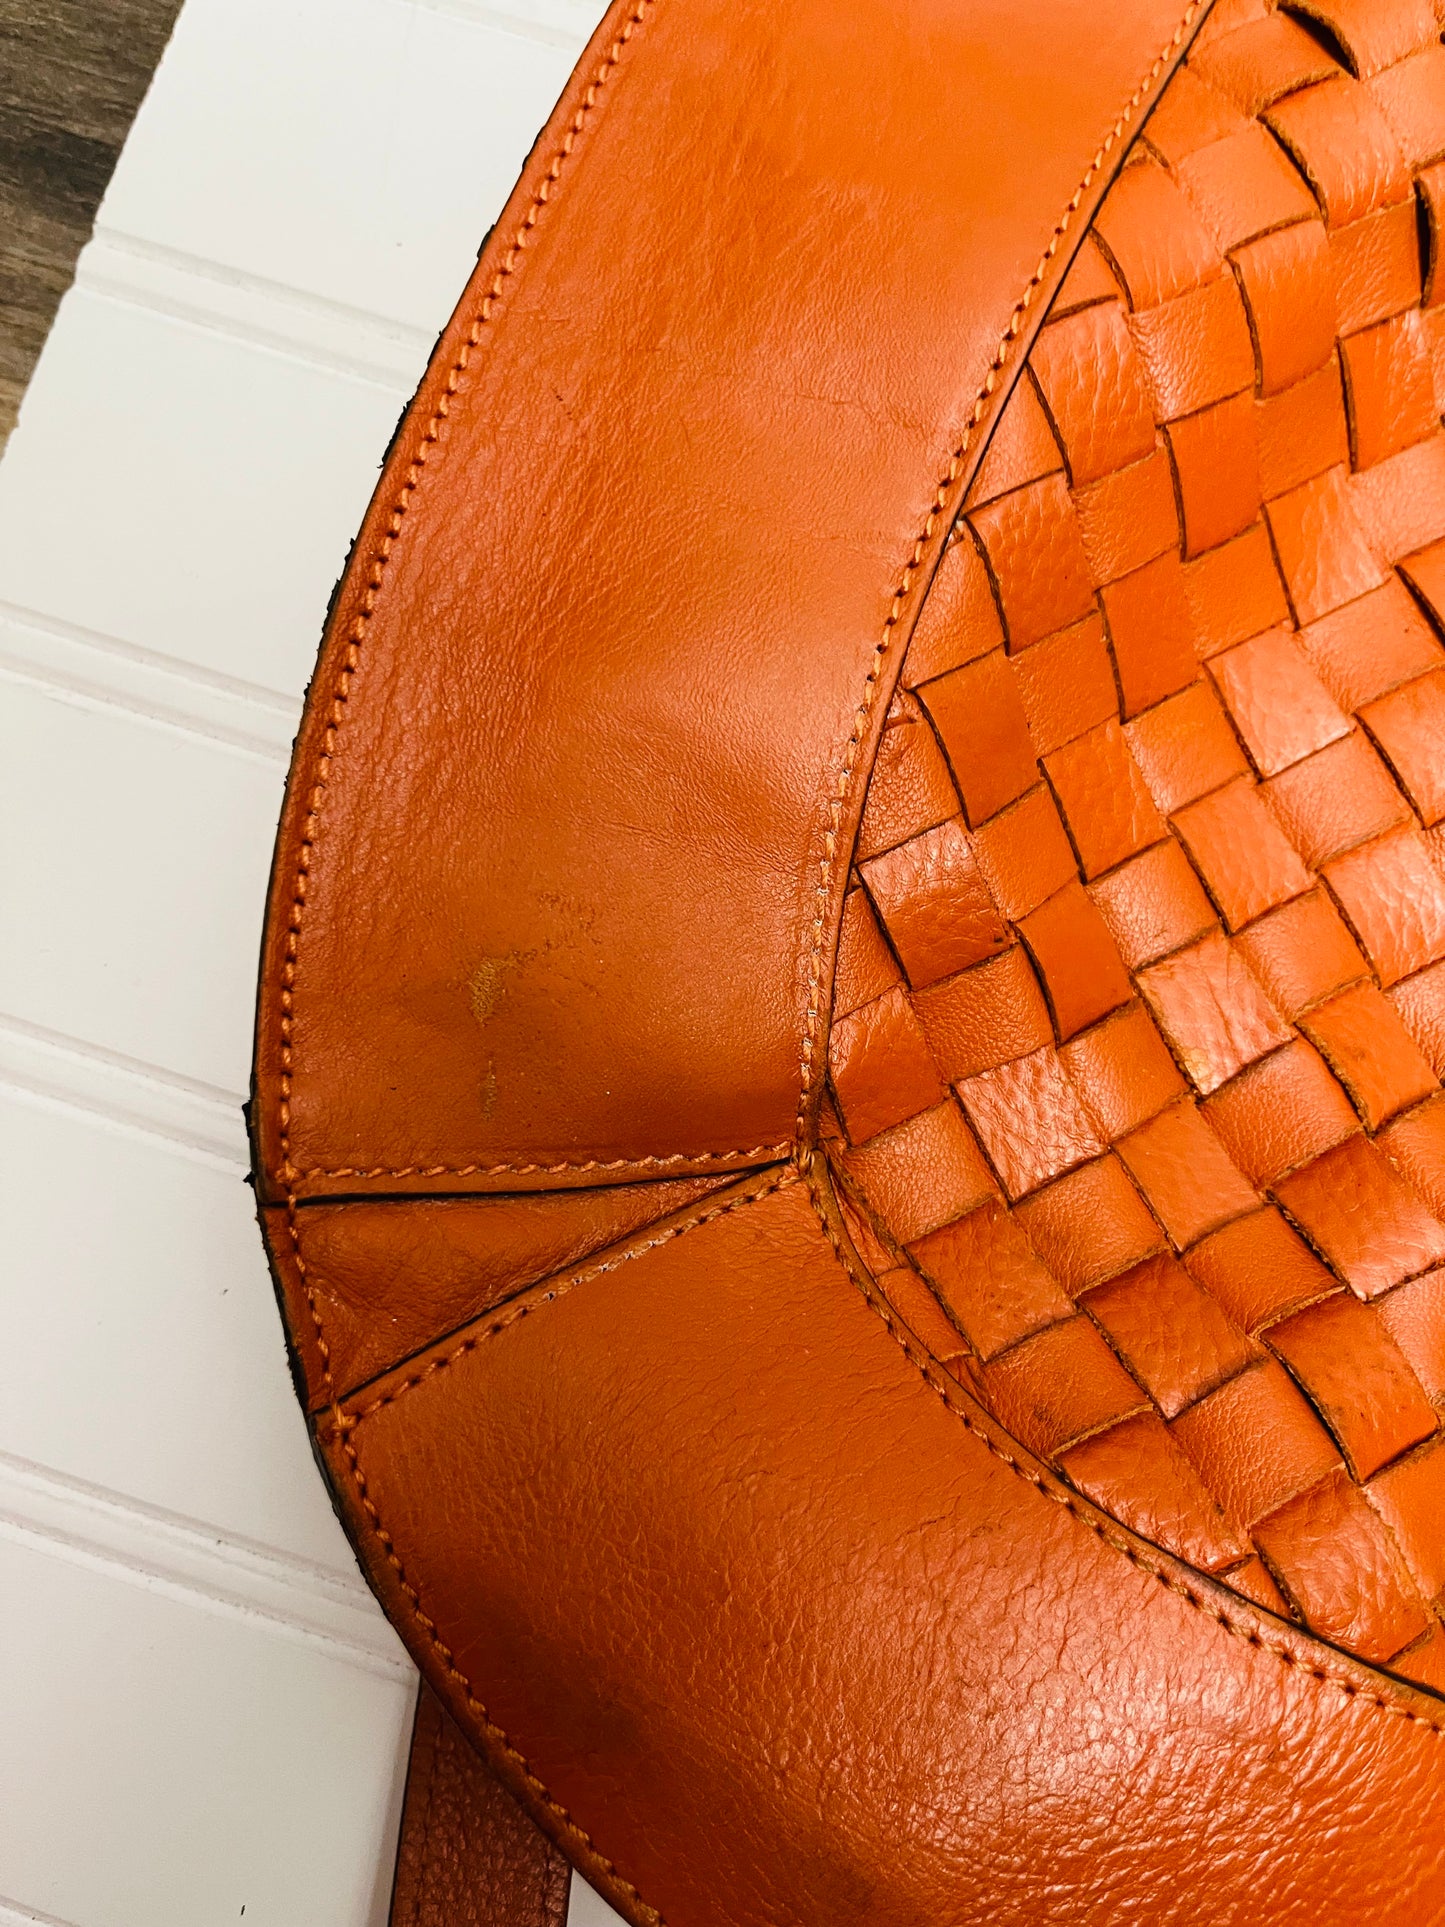 Crossbody Leather By anna paoli   Size: Medium